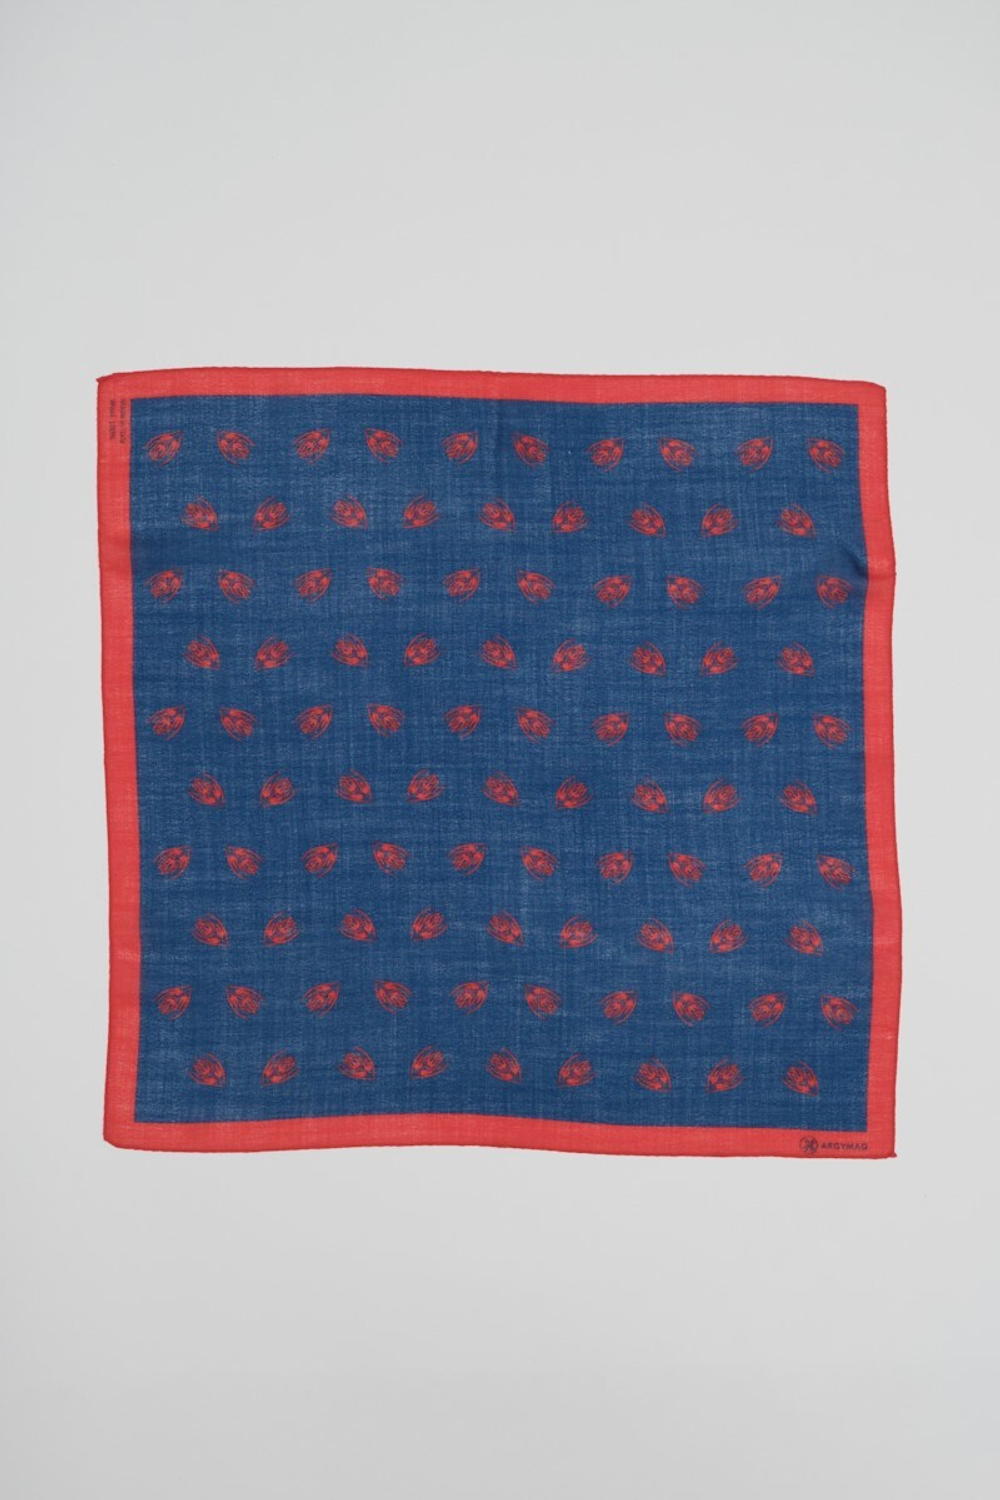 Шерстяной платок Ласточка и тюльпан BLUE/RED 70×70